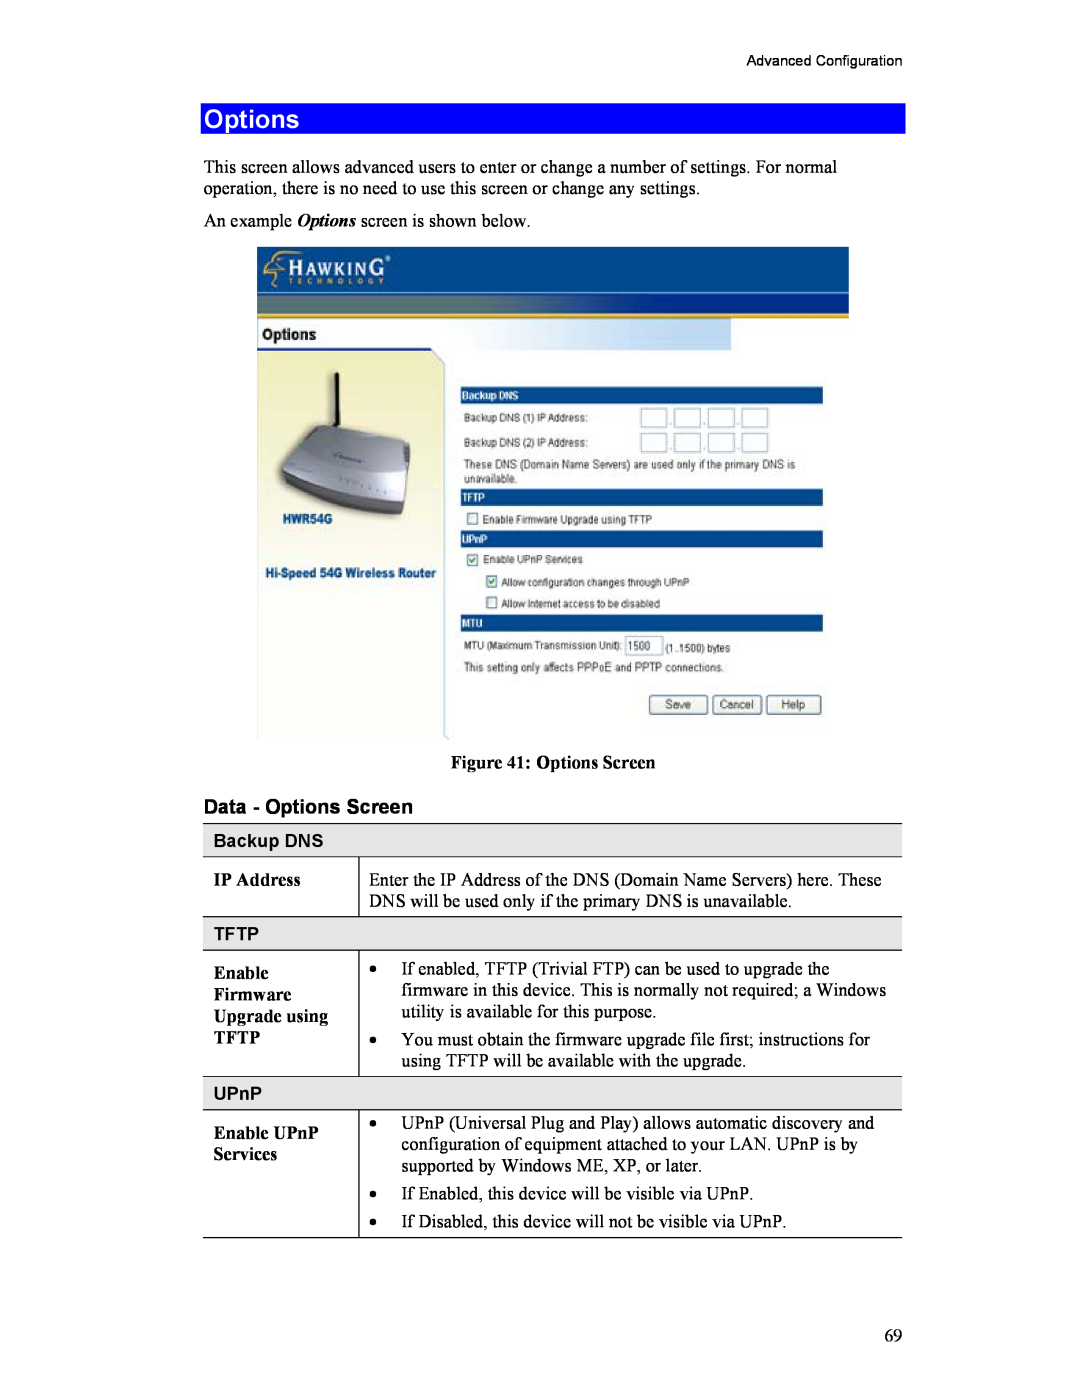 Hawking Technology HWR54G manual Options Screen, Backup DNS, IP Address, Tftp, Enable, Firmware, Upgrade using, UPnP 